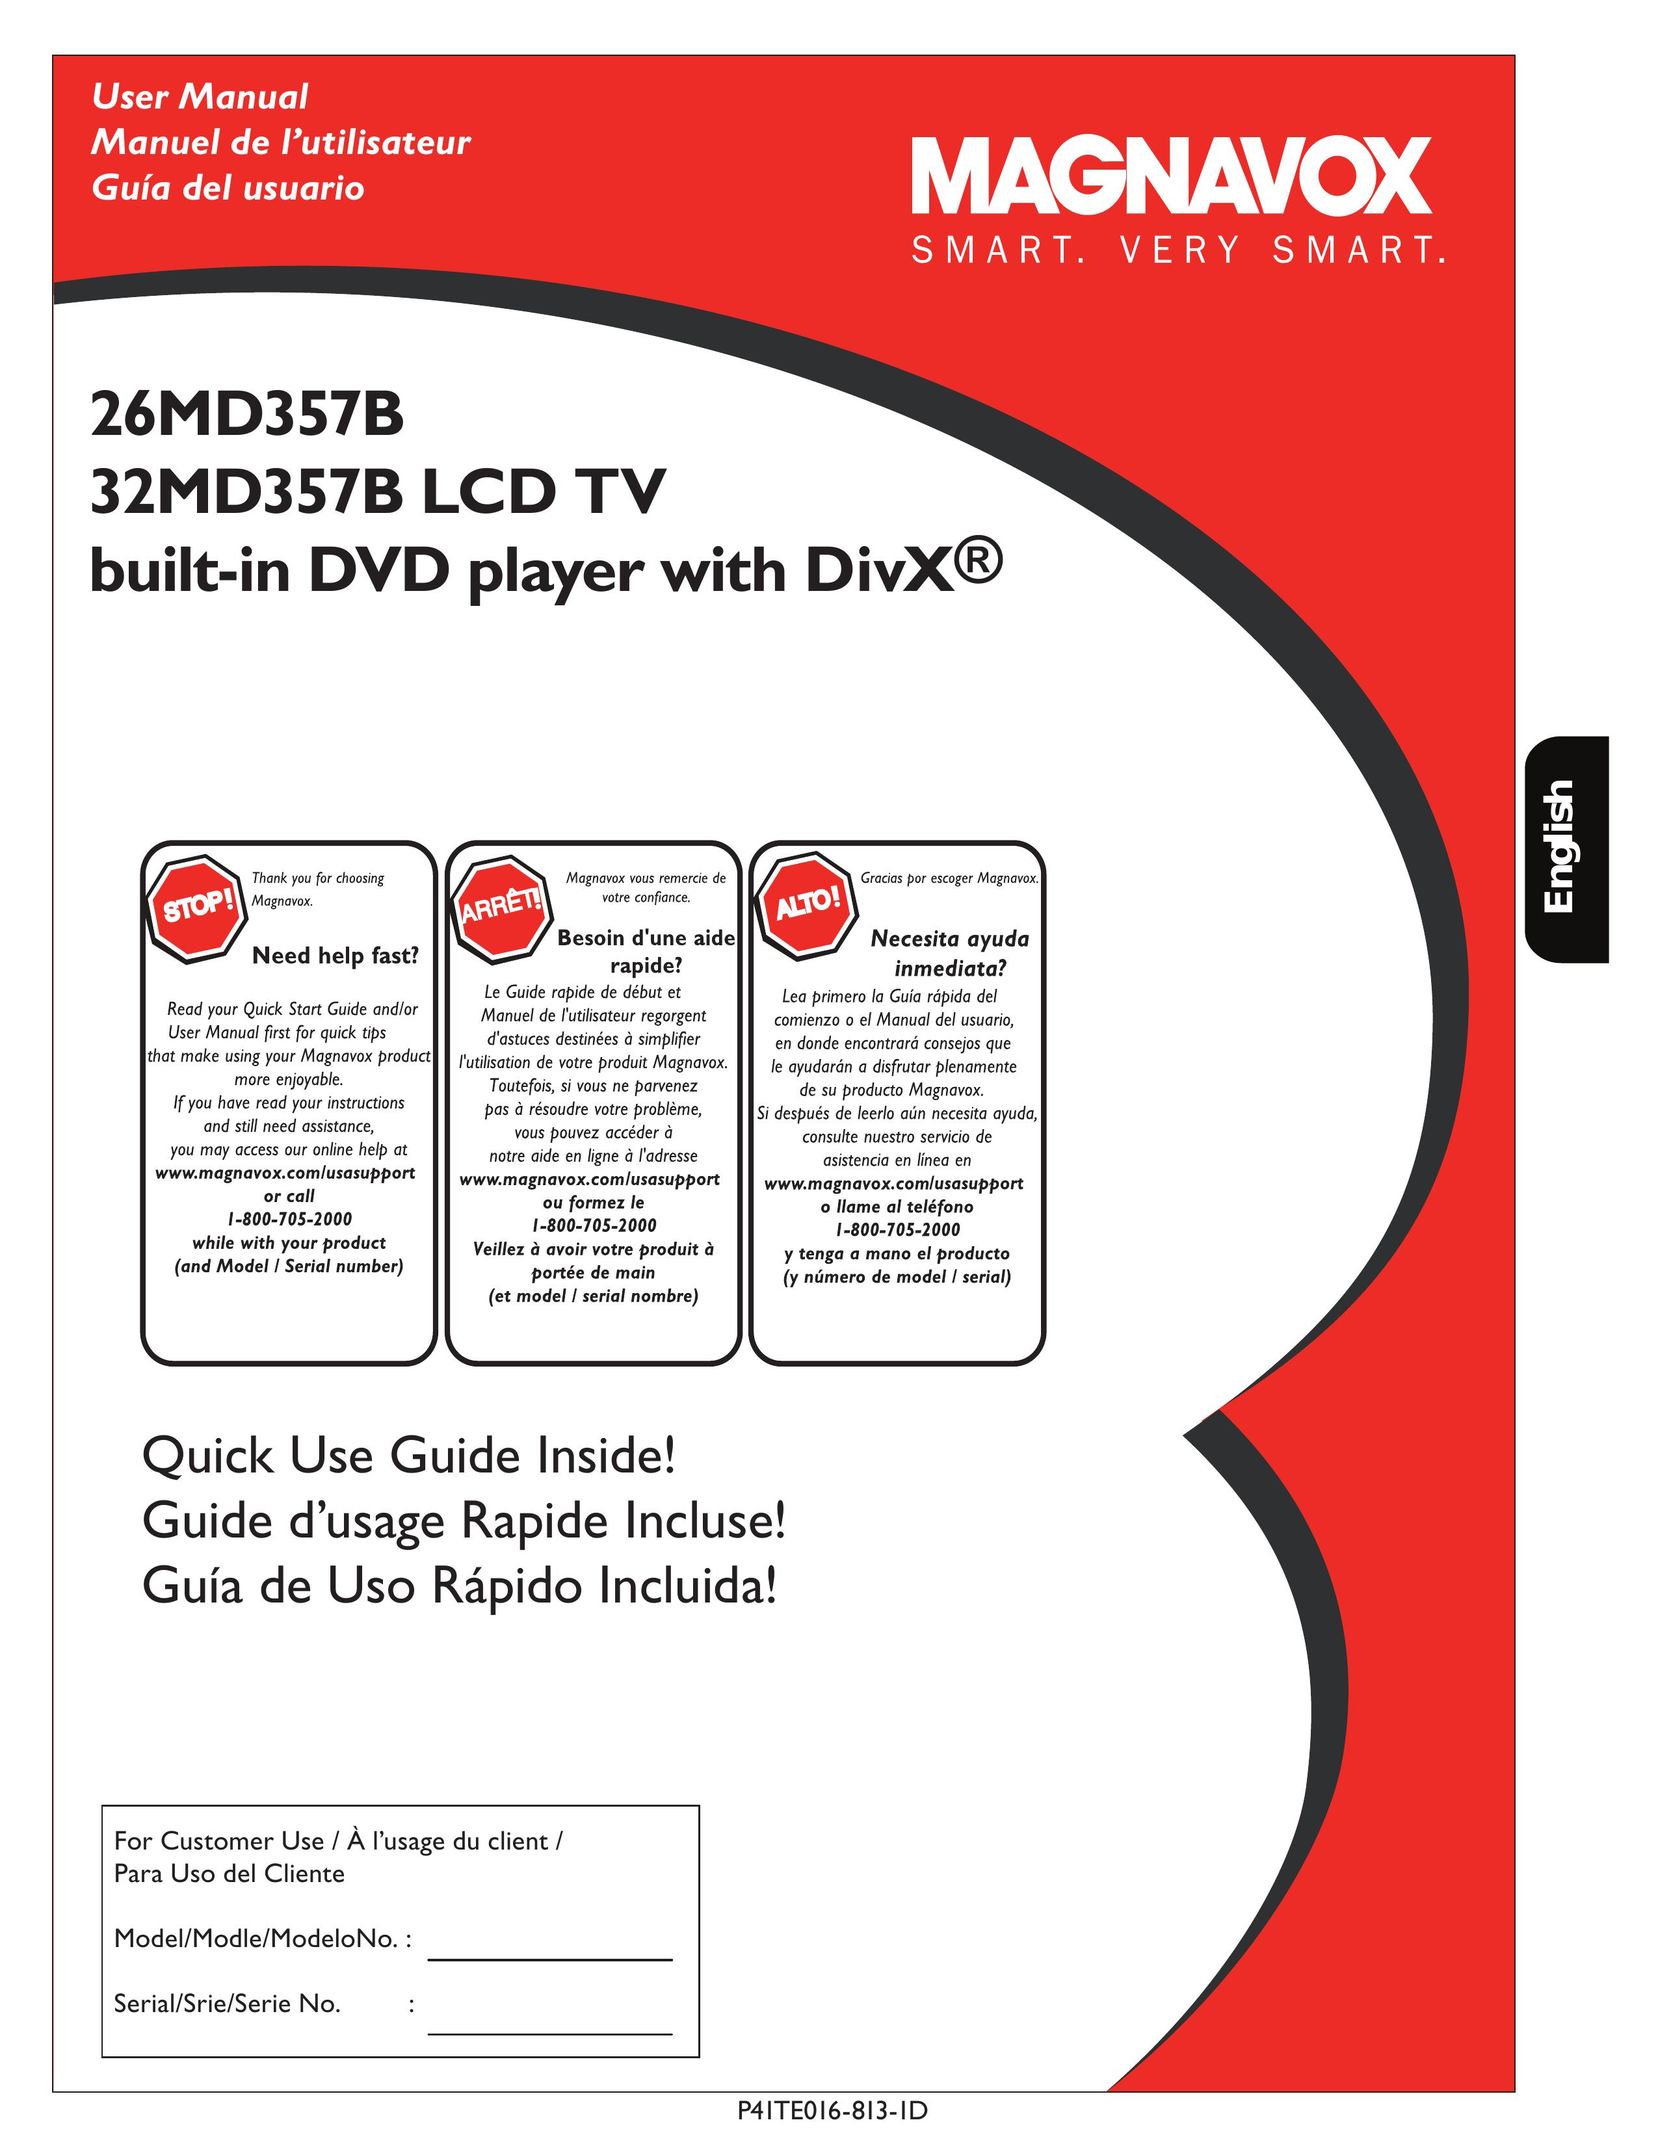 Magnavox 26md357b DVD Player User Manual